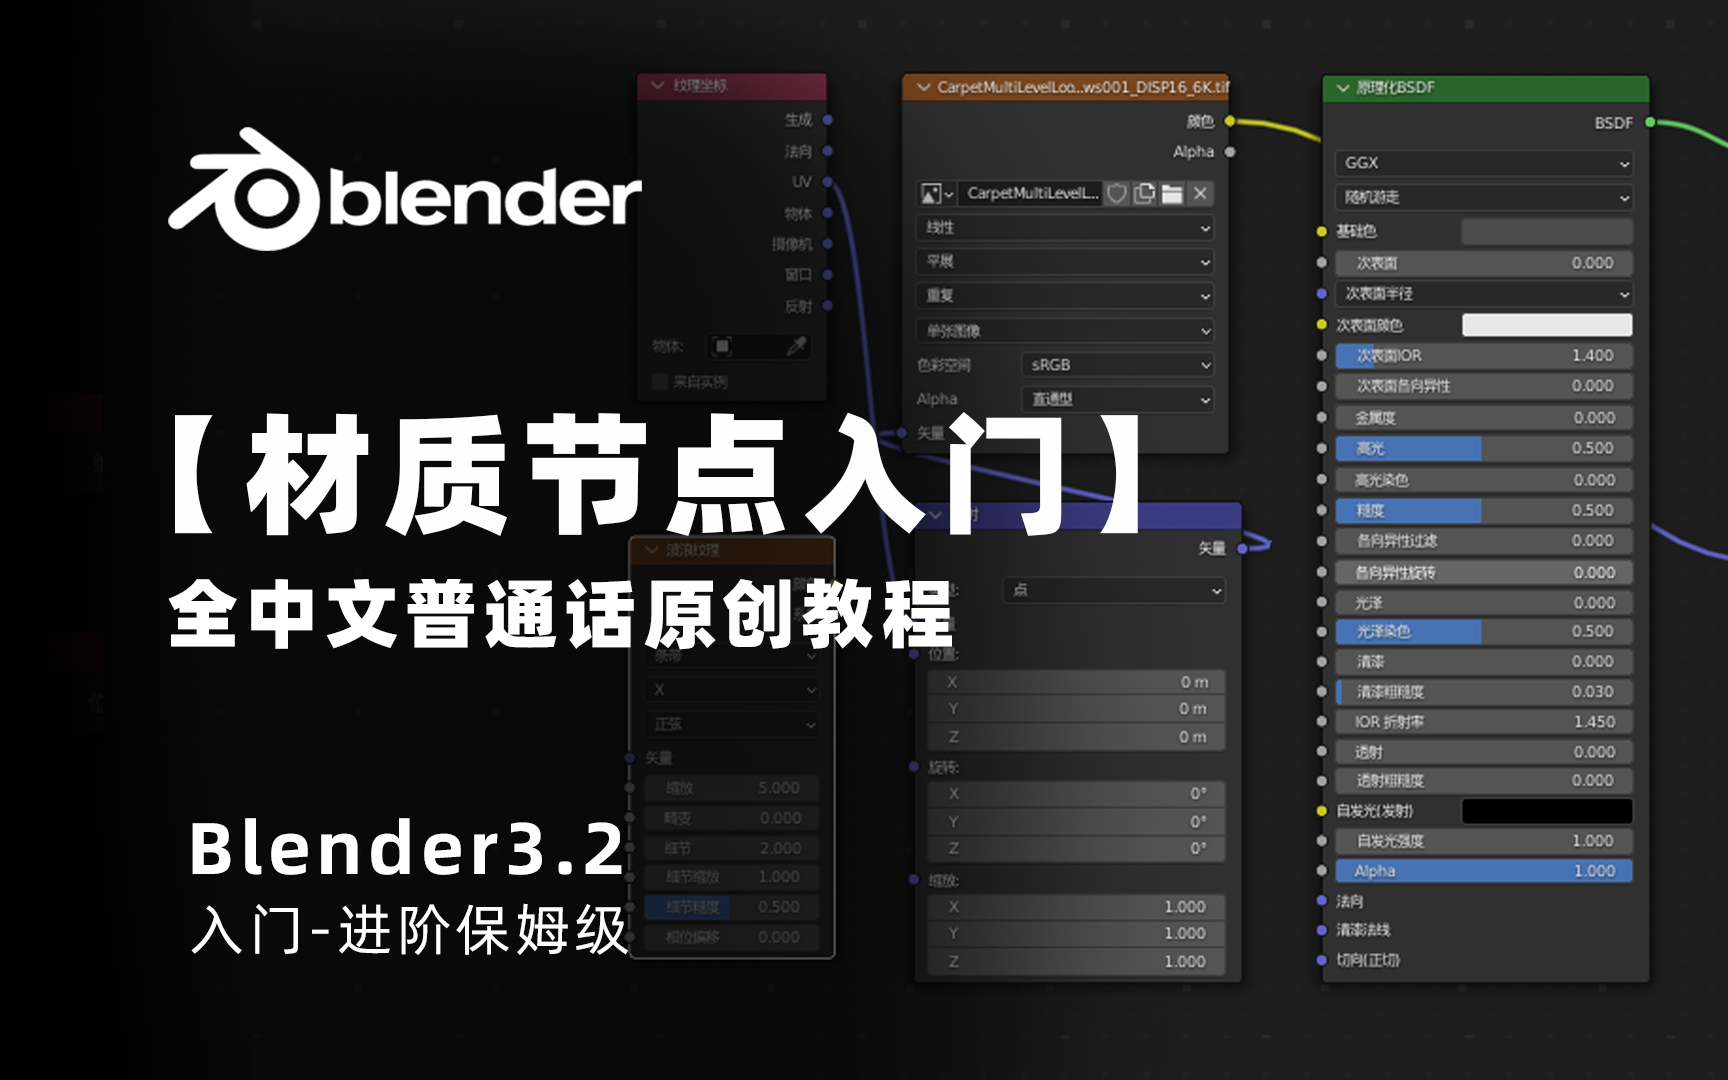 【blender3.2】材质几何节点，基础入门级【全集】，全中文教程，中文软件，(普通话+全流程+案例+学习)持续跟新中